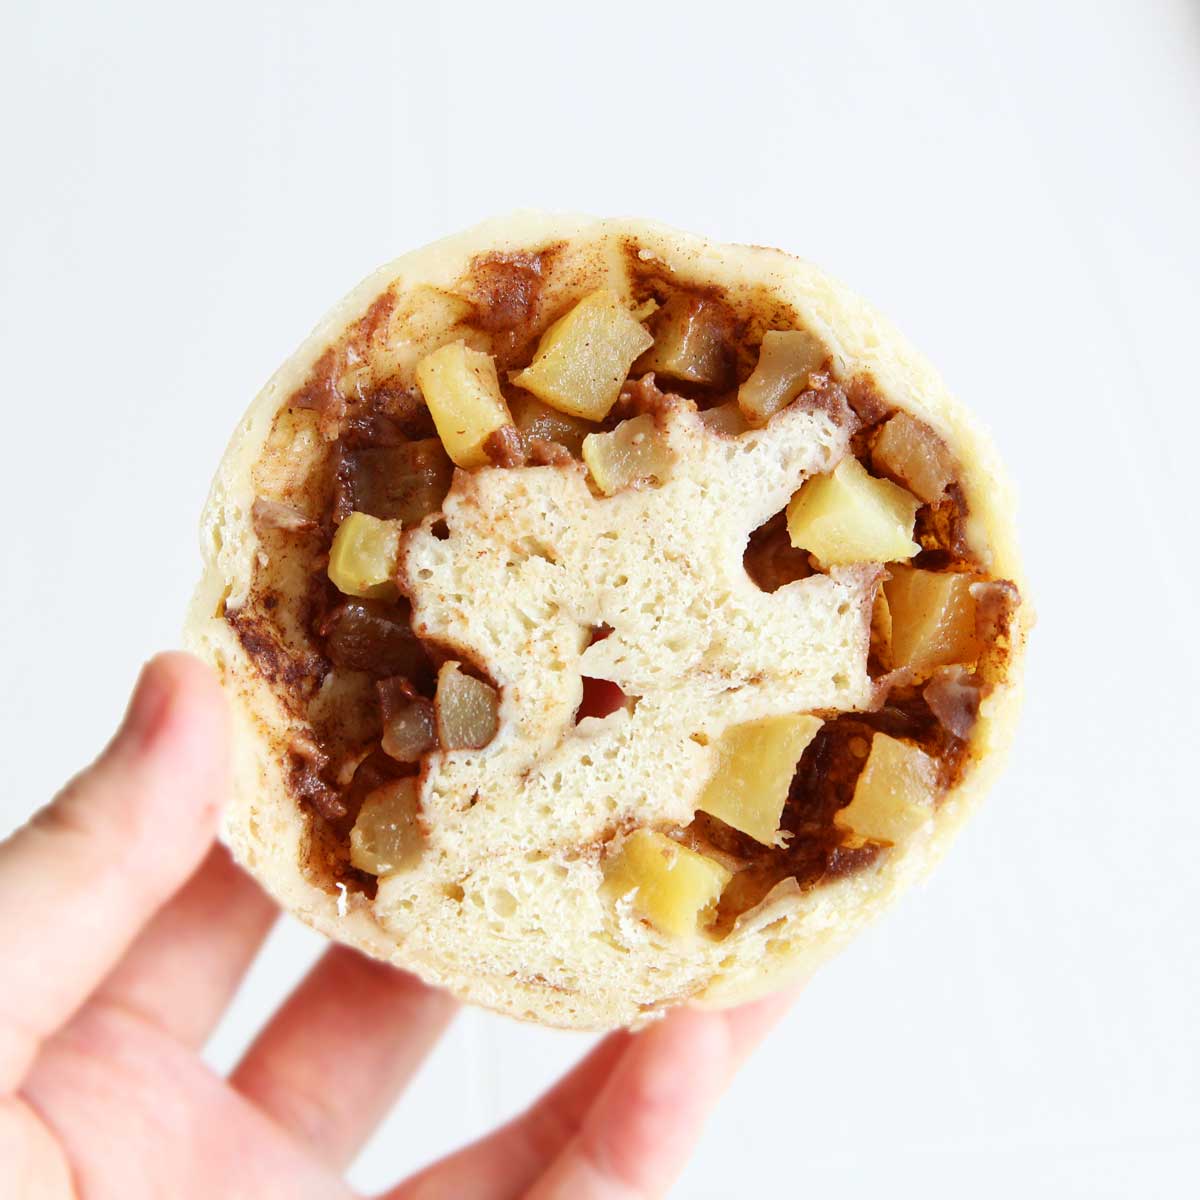 Vegan Apple Pie Stuffed Bagels (A Healthier, Fat-Free Recipe) - Peanut Butter Banana Bread